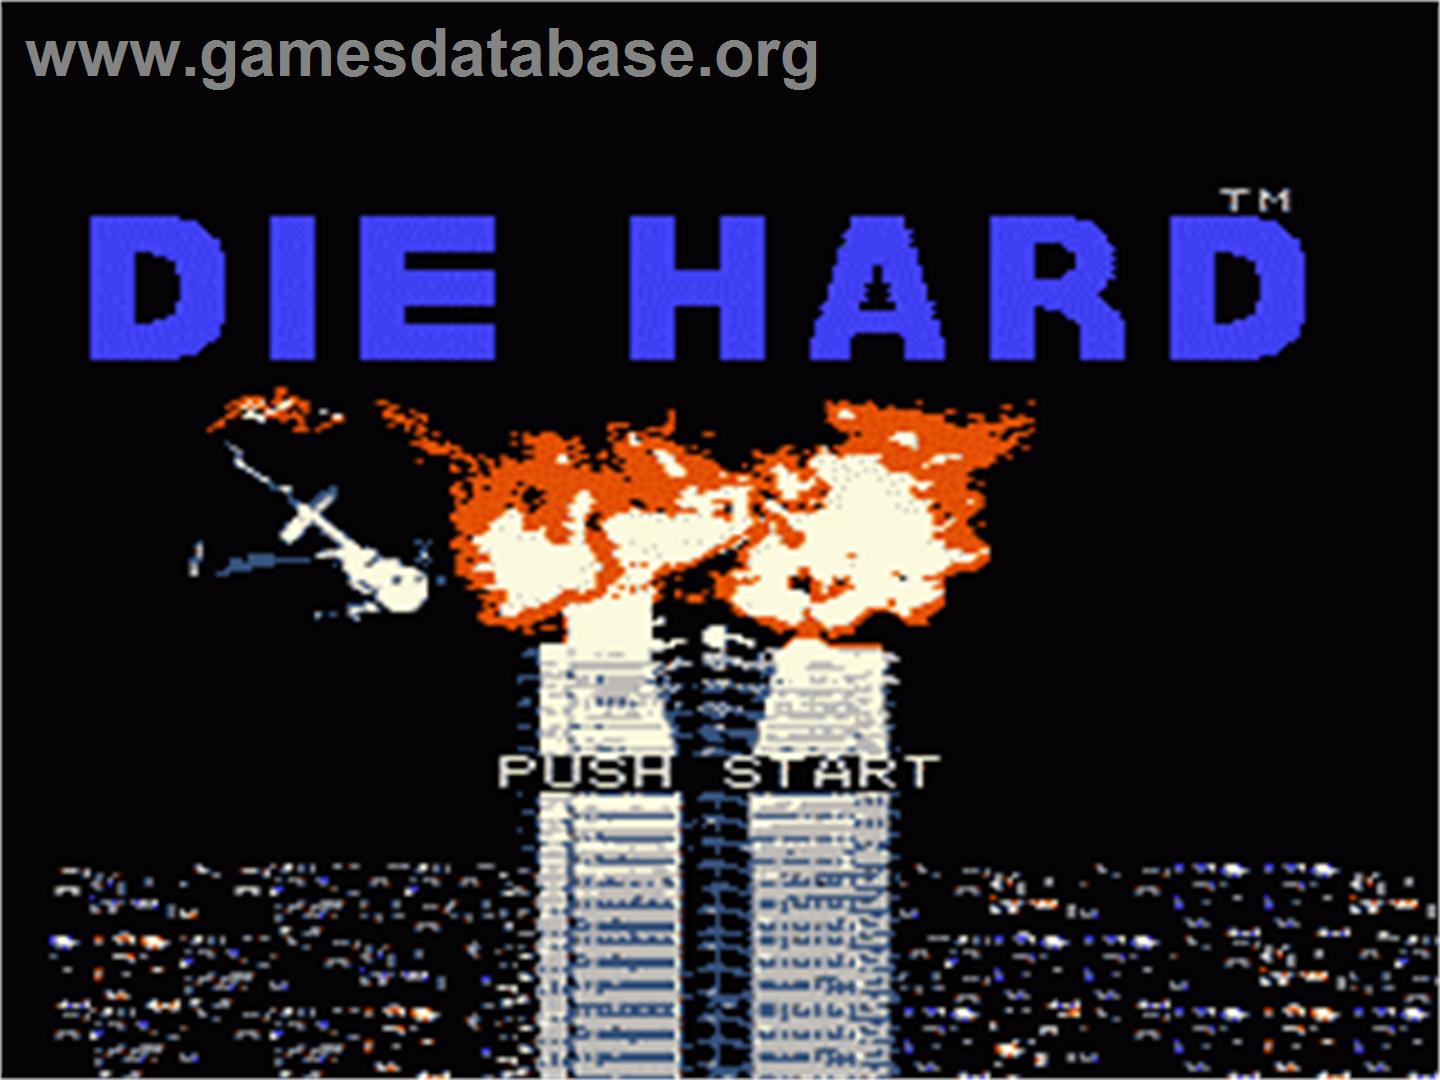 Dirty Harry - Nintendo NES - Artwork - Title Screen